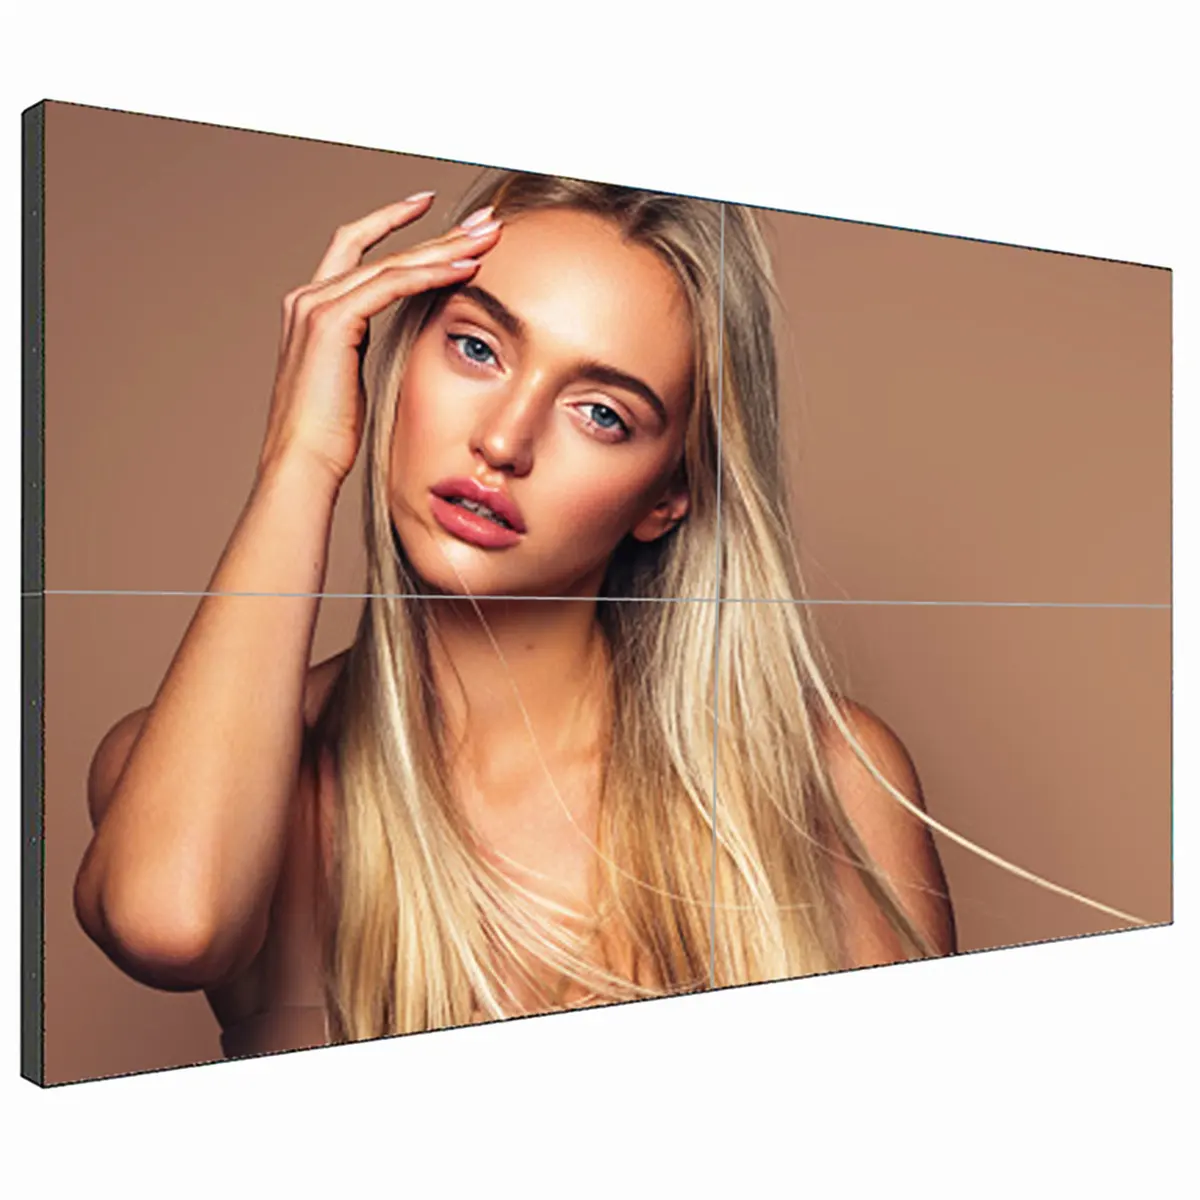 Pantalla digital LCD de pared para publicidad, pantalla de señalización de vídeo de 55 pulgadas, 3x3, controlador de pantallas de empalme 2x2